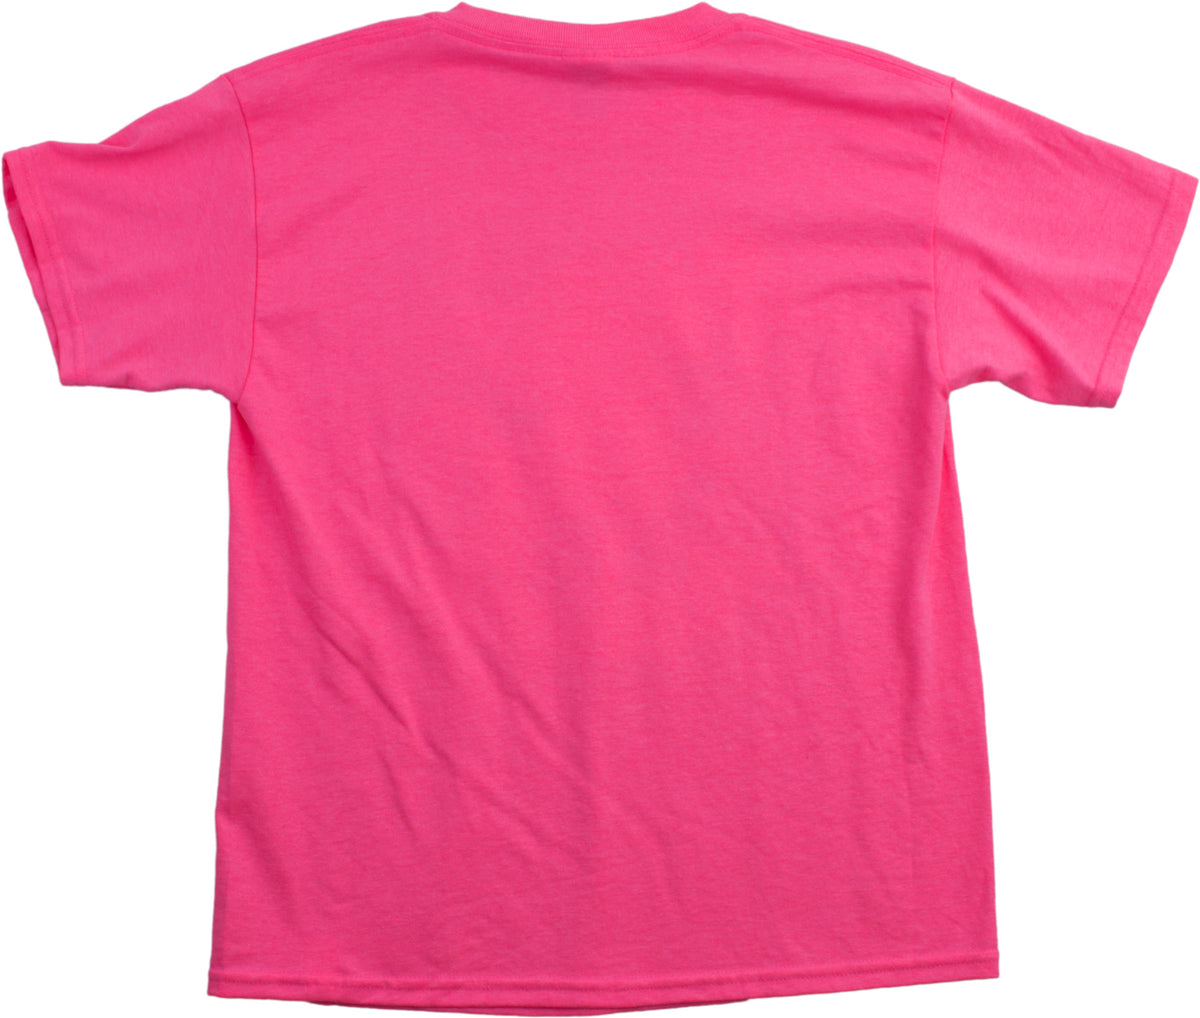 Birthday Girl Unicorn | Neon Pink Unicorn B-day Party Top Girls' Youth T-shirt